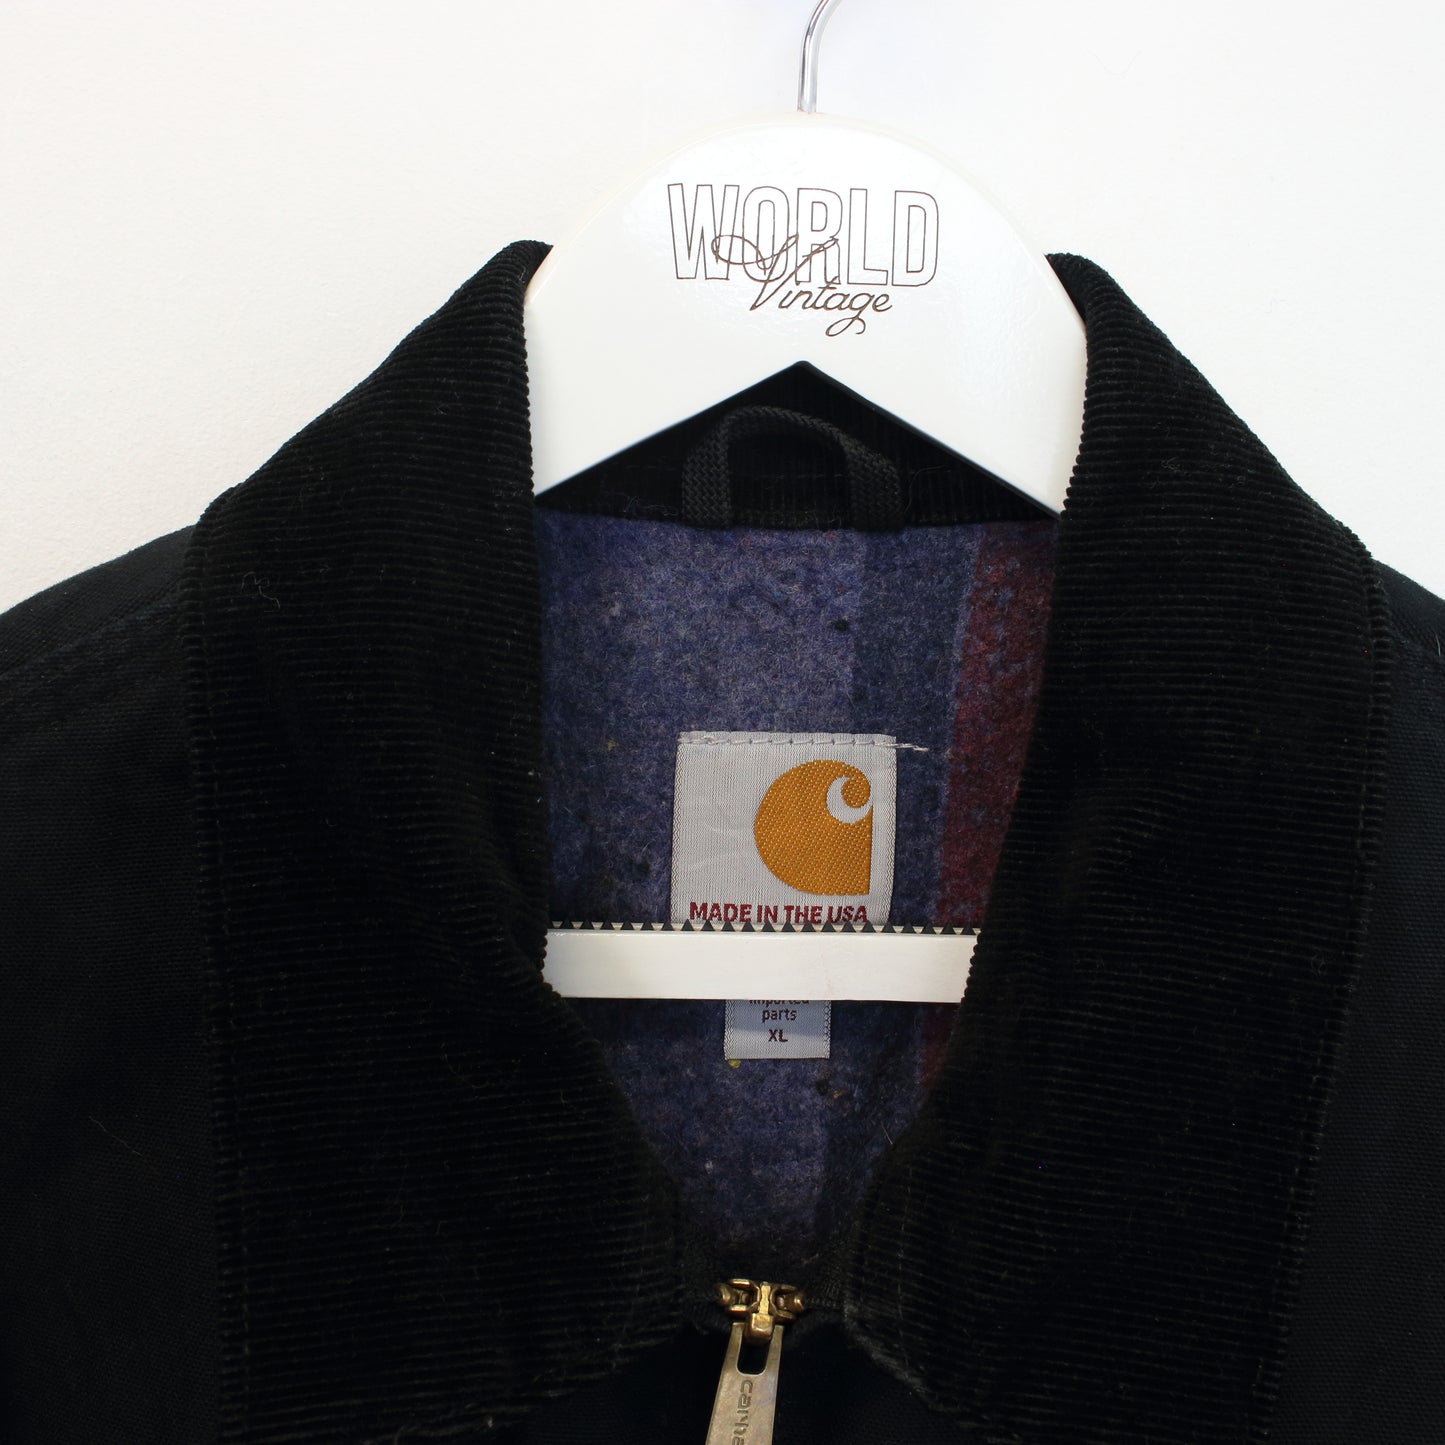 Vintage Carhartt jacket in black. Best fits XL